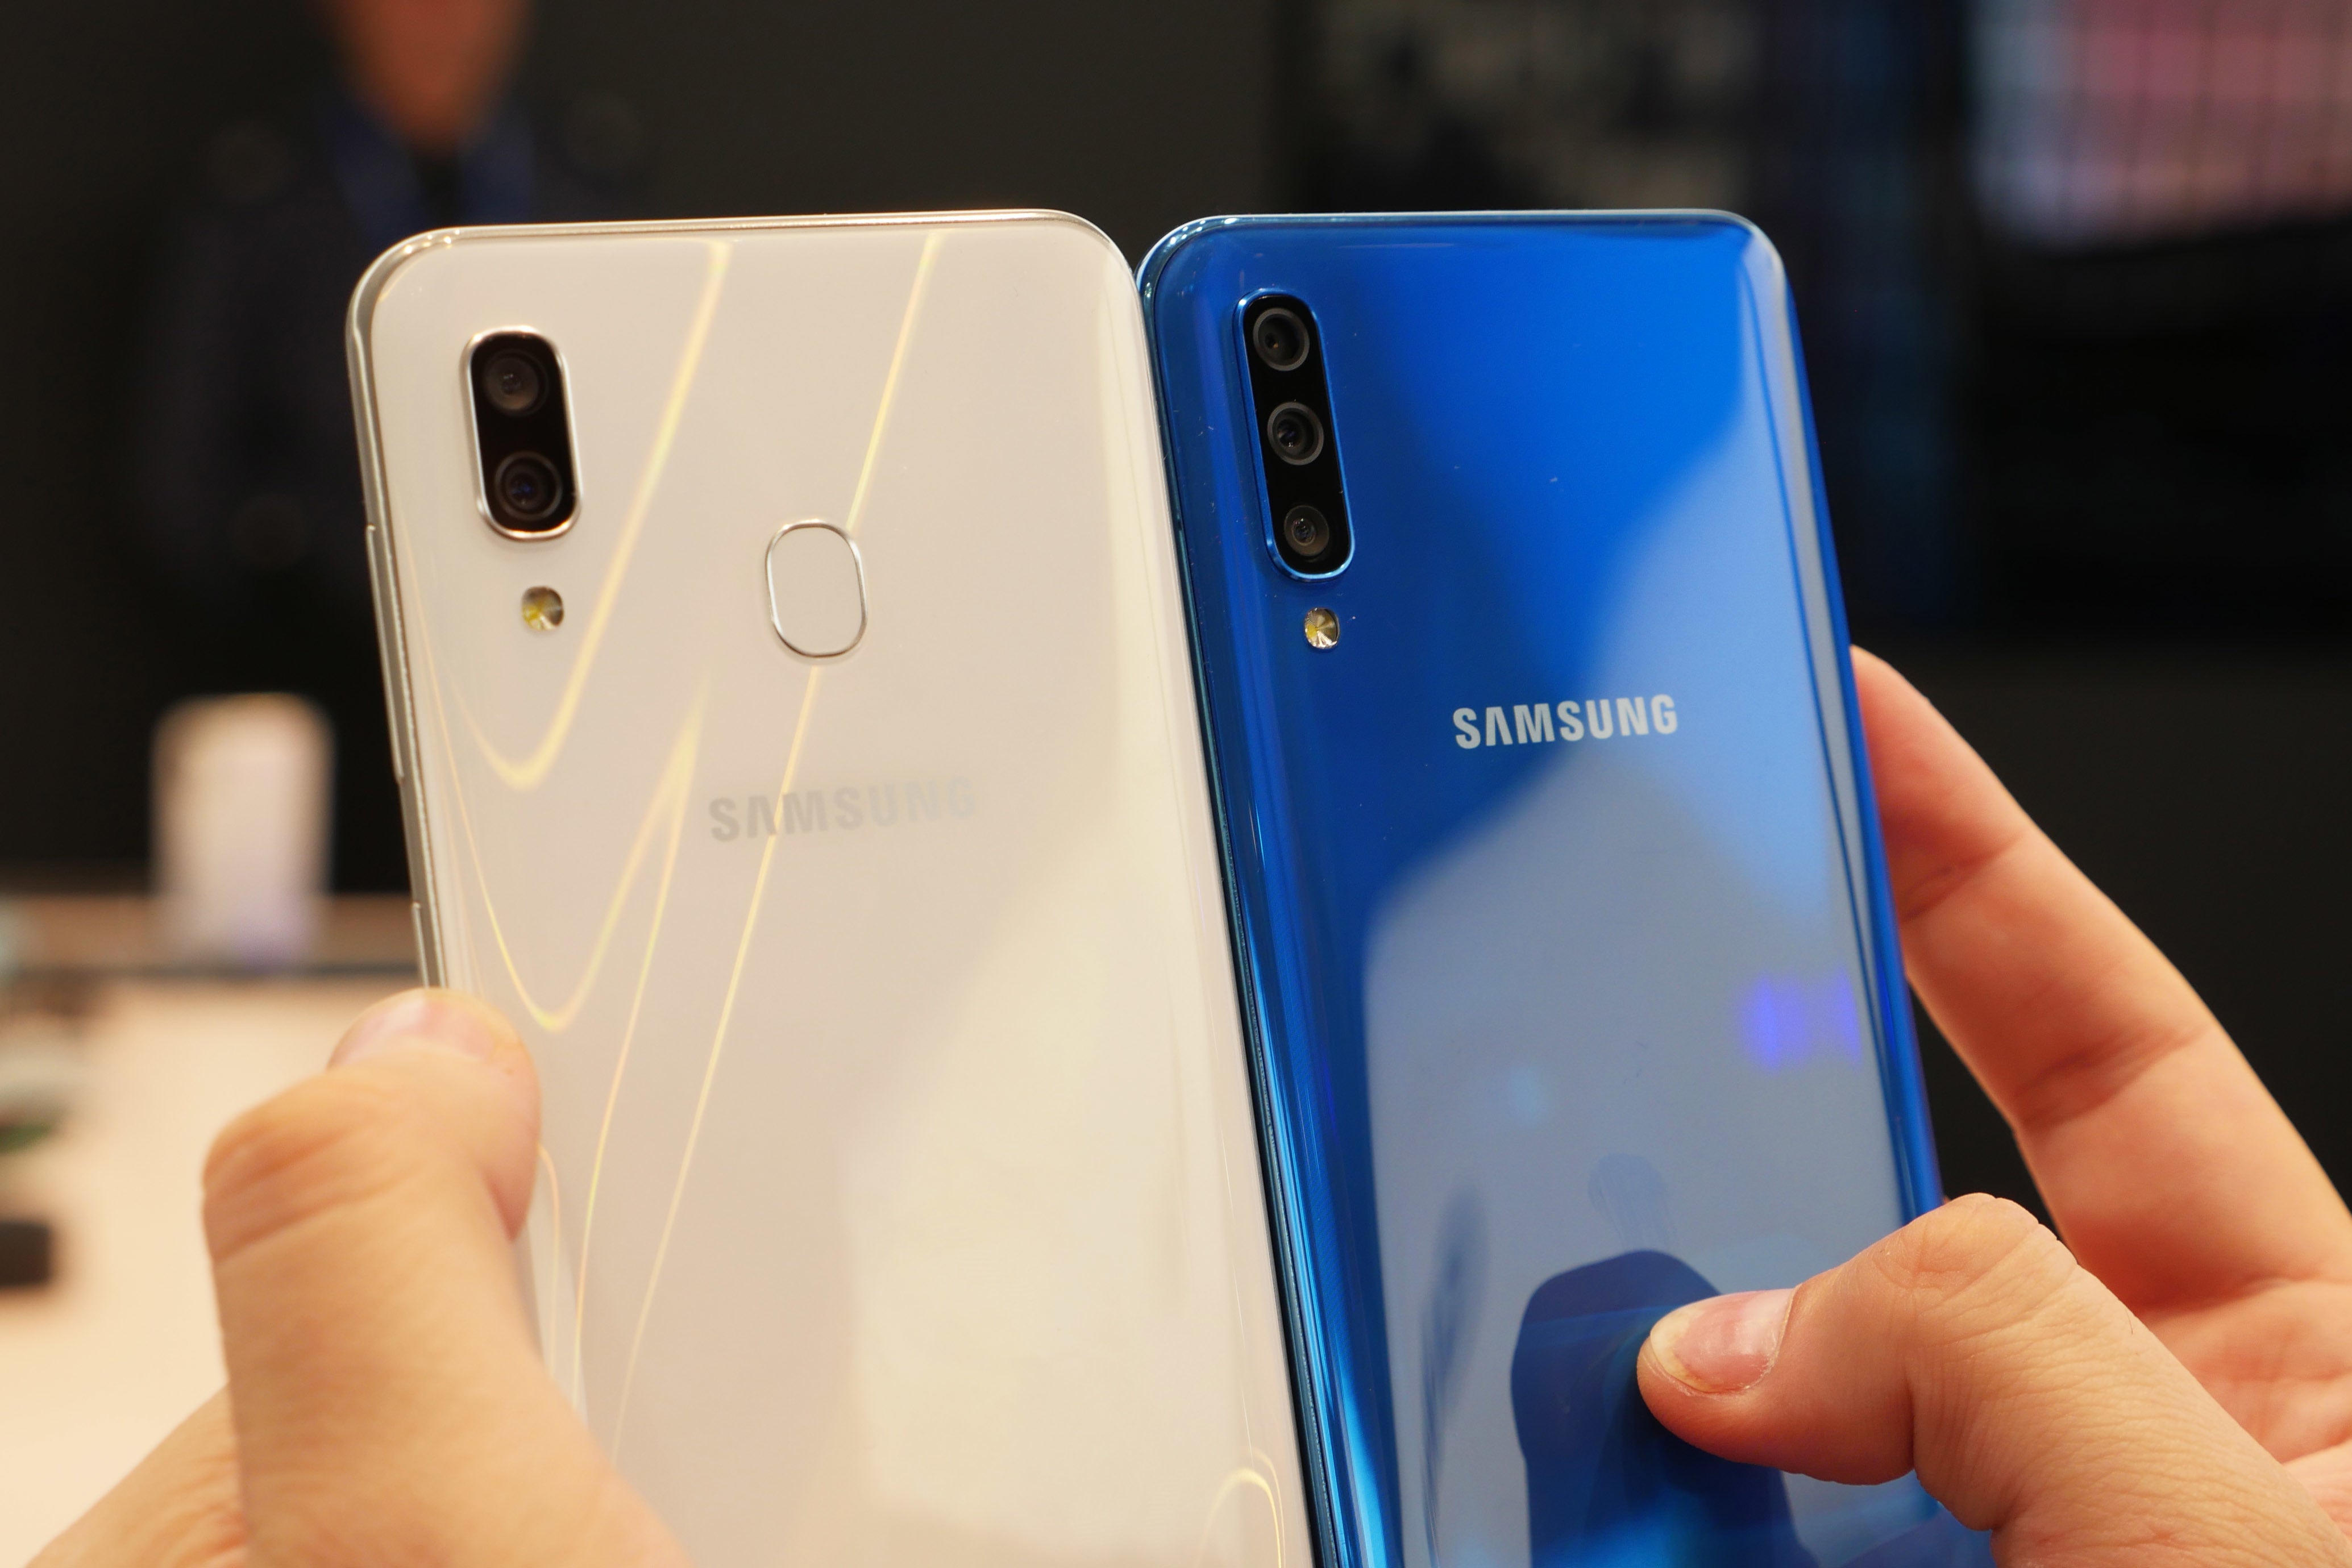 The Samsung Galaxy A30 &amp; A50 - Samsung's next Galaxy smartphones will arrive April 10